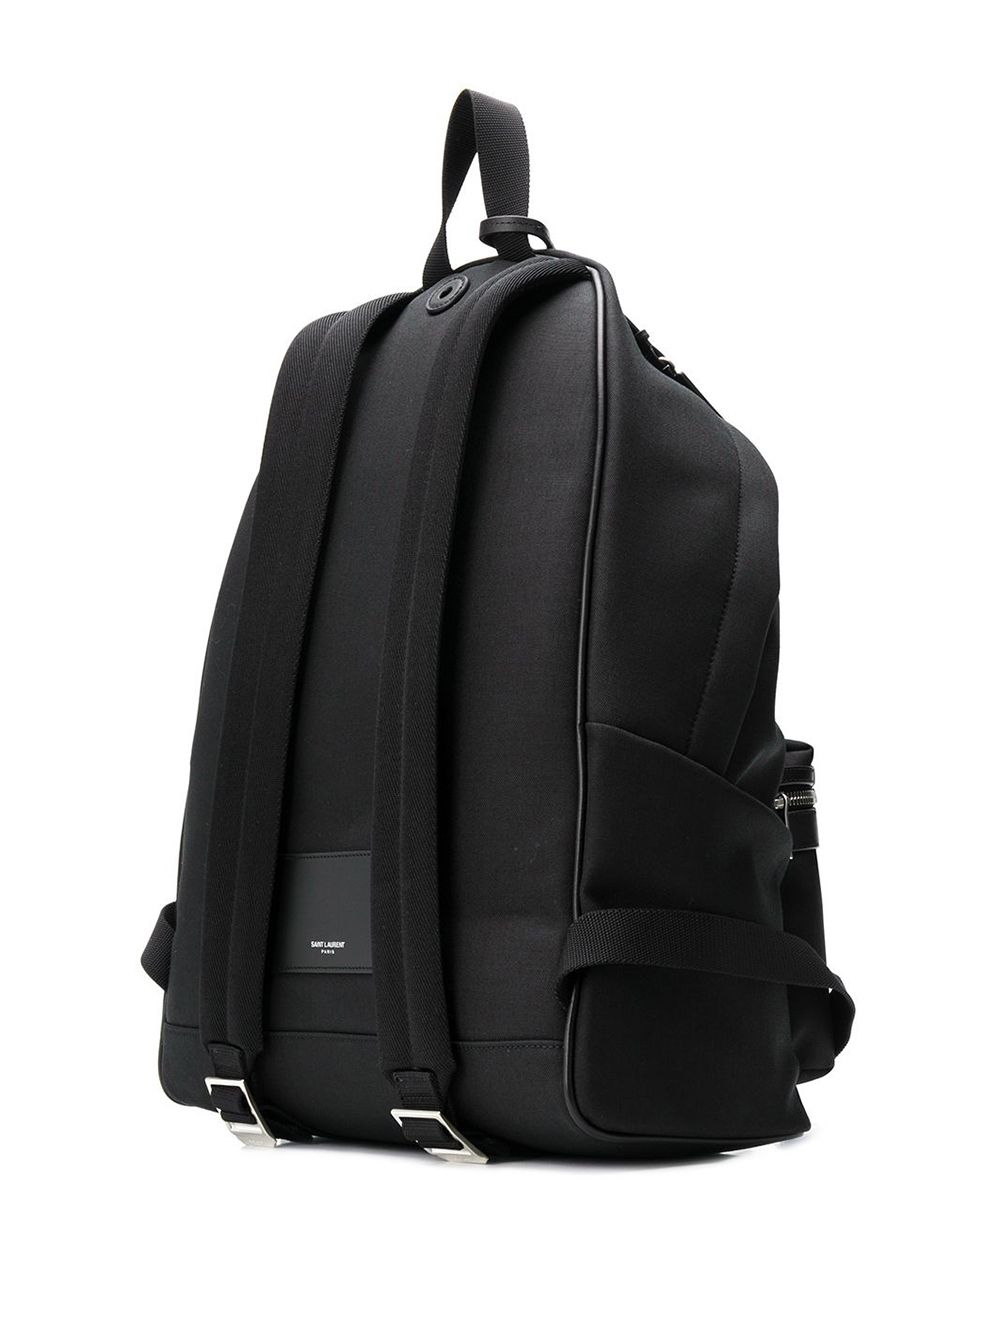 saint laurent backpack